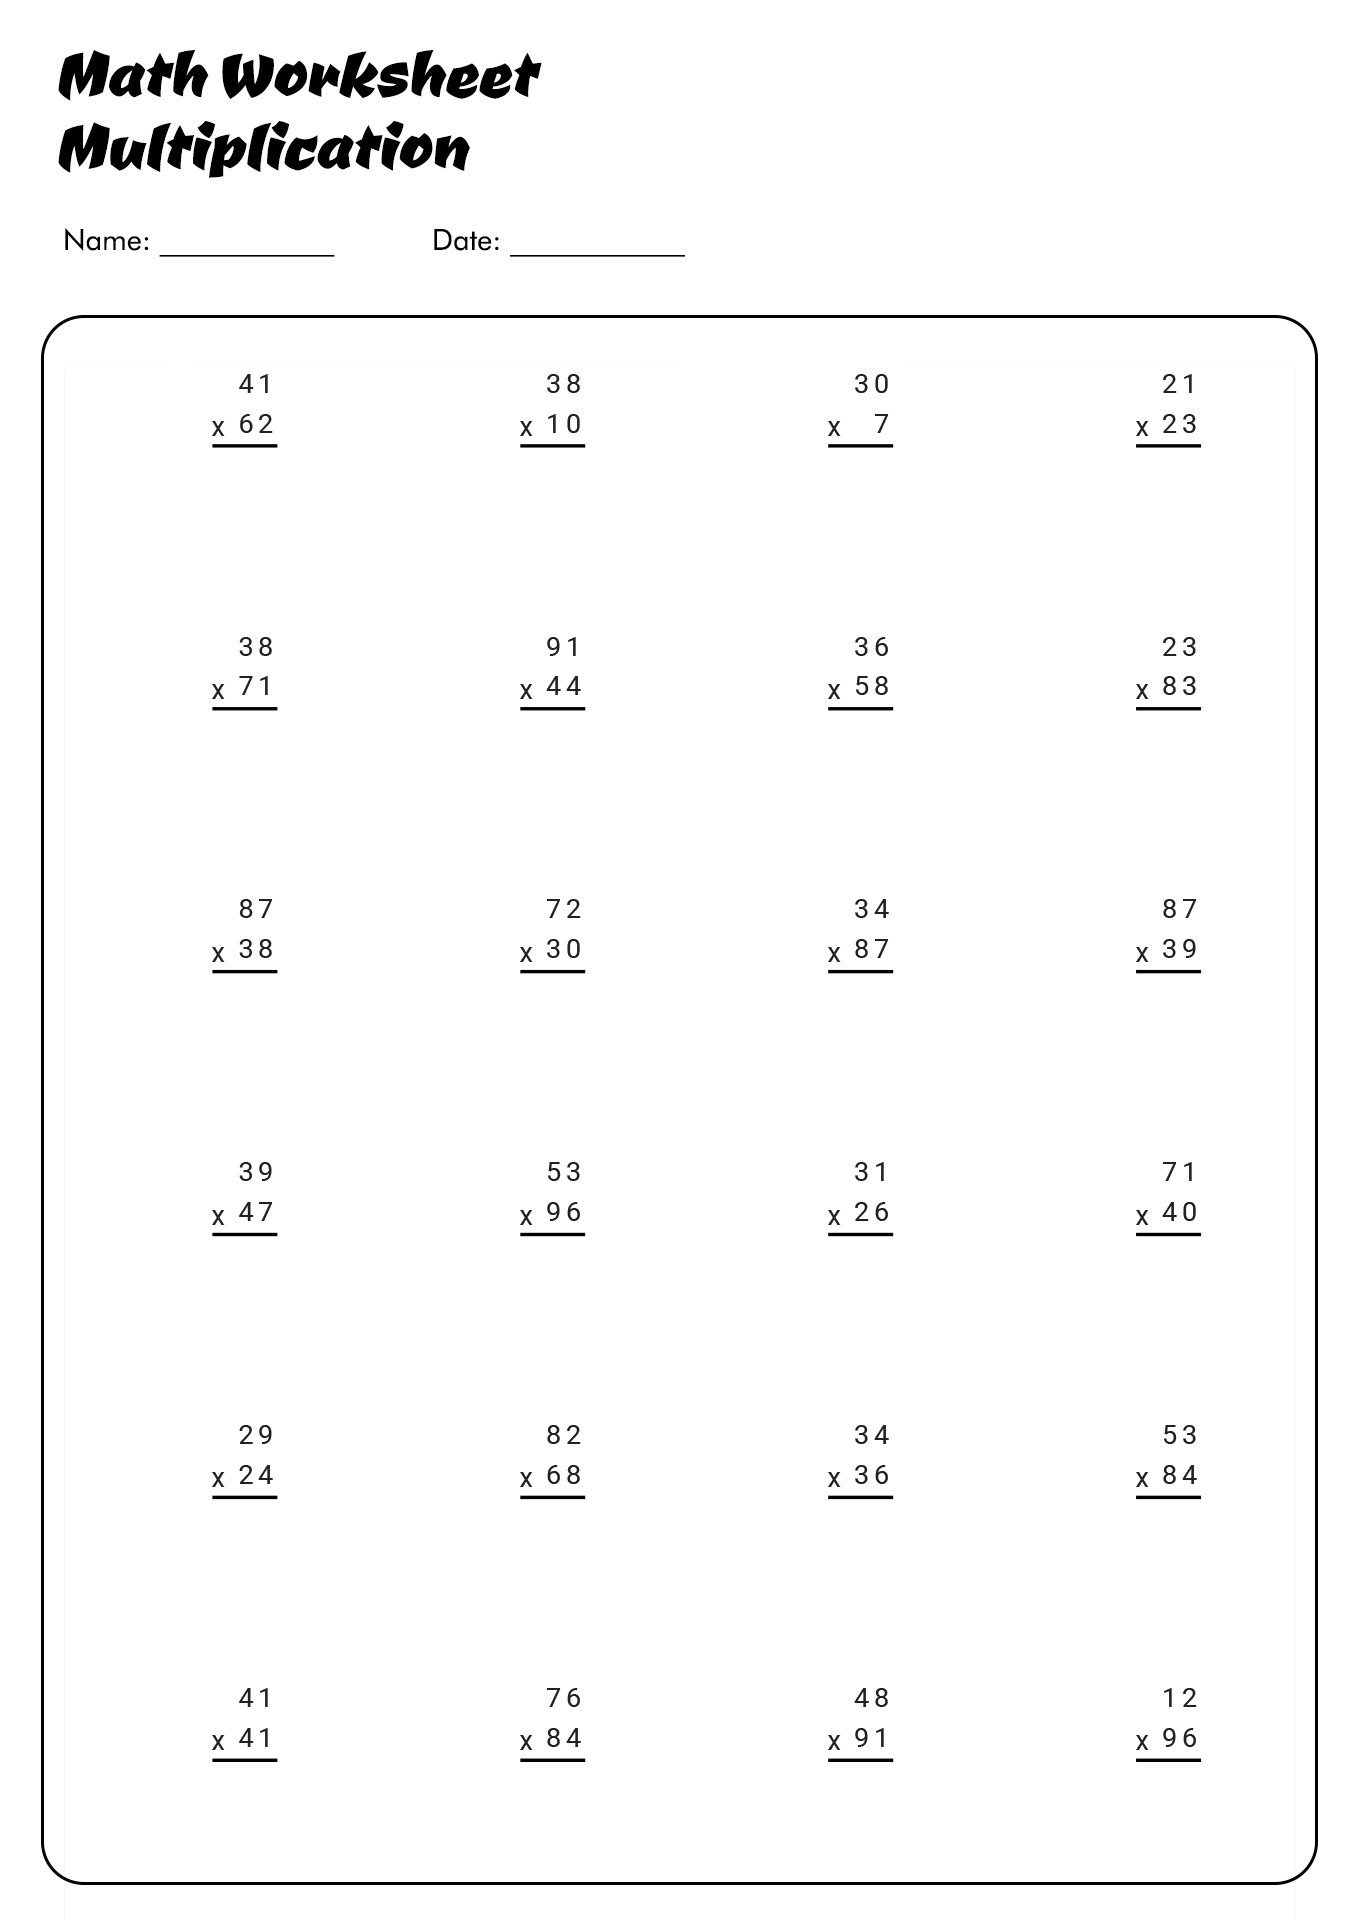 5th Grade Math Worksheets Multiplication Printable Image